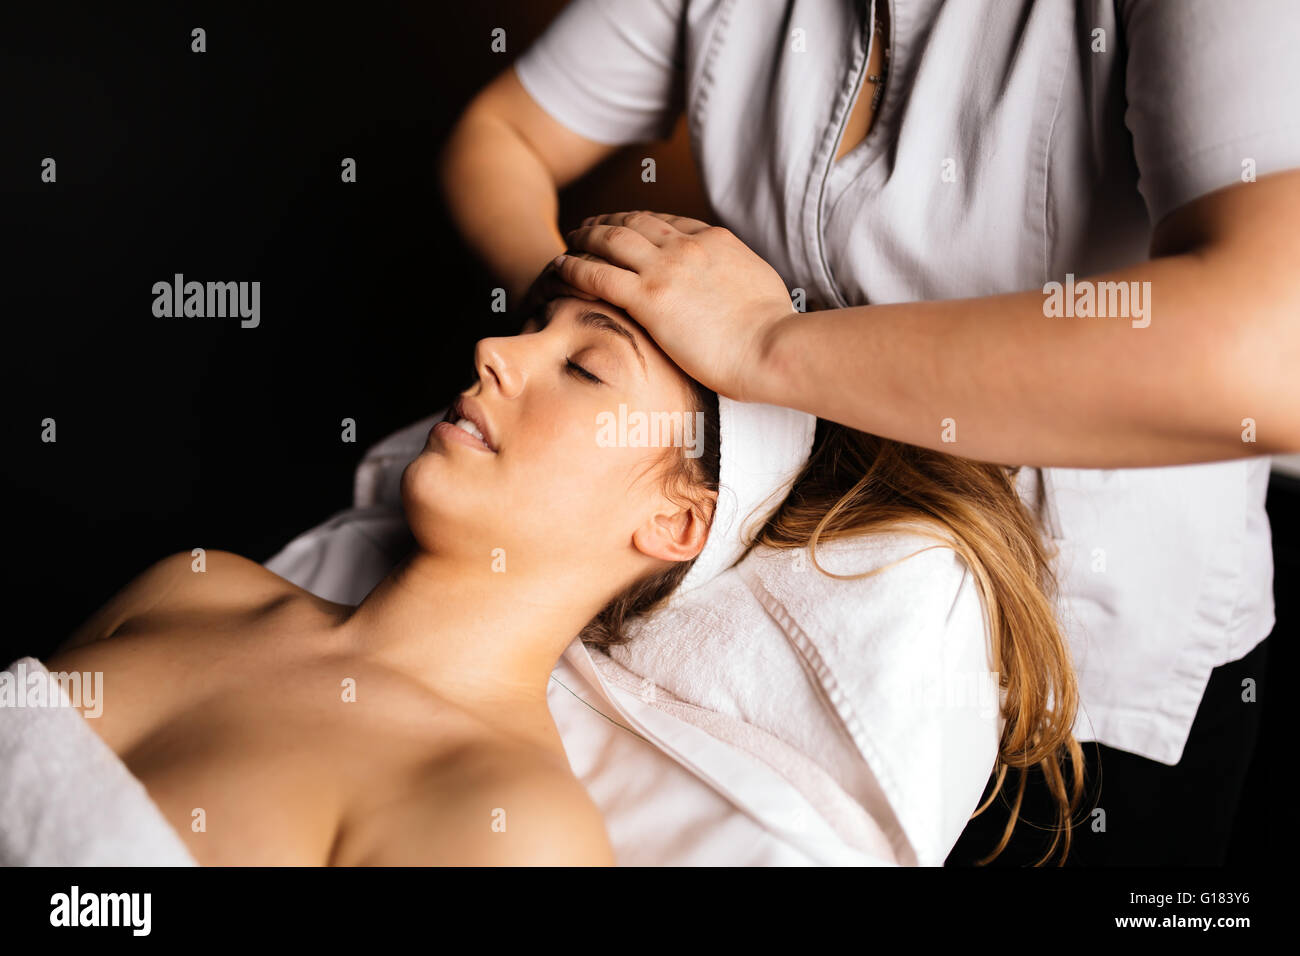 Massage therapist massaging belle brune Banque D'Images